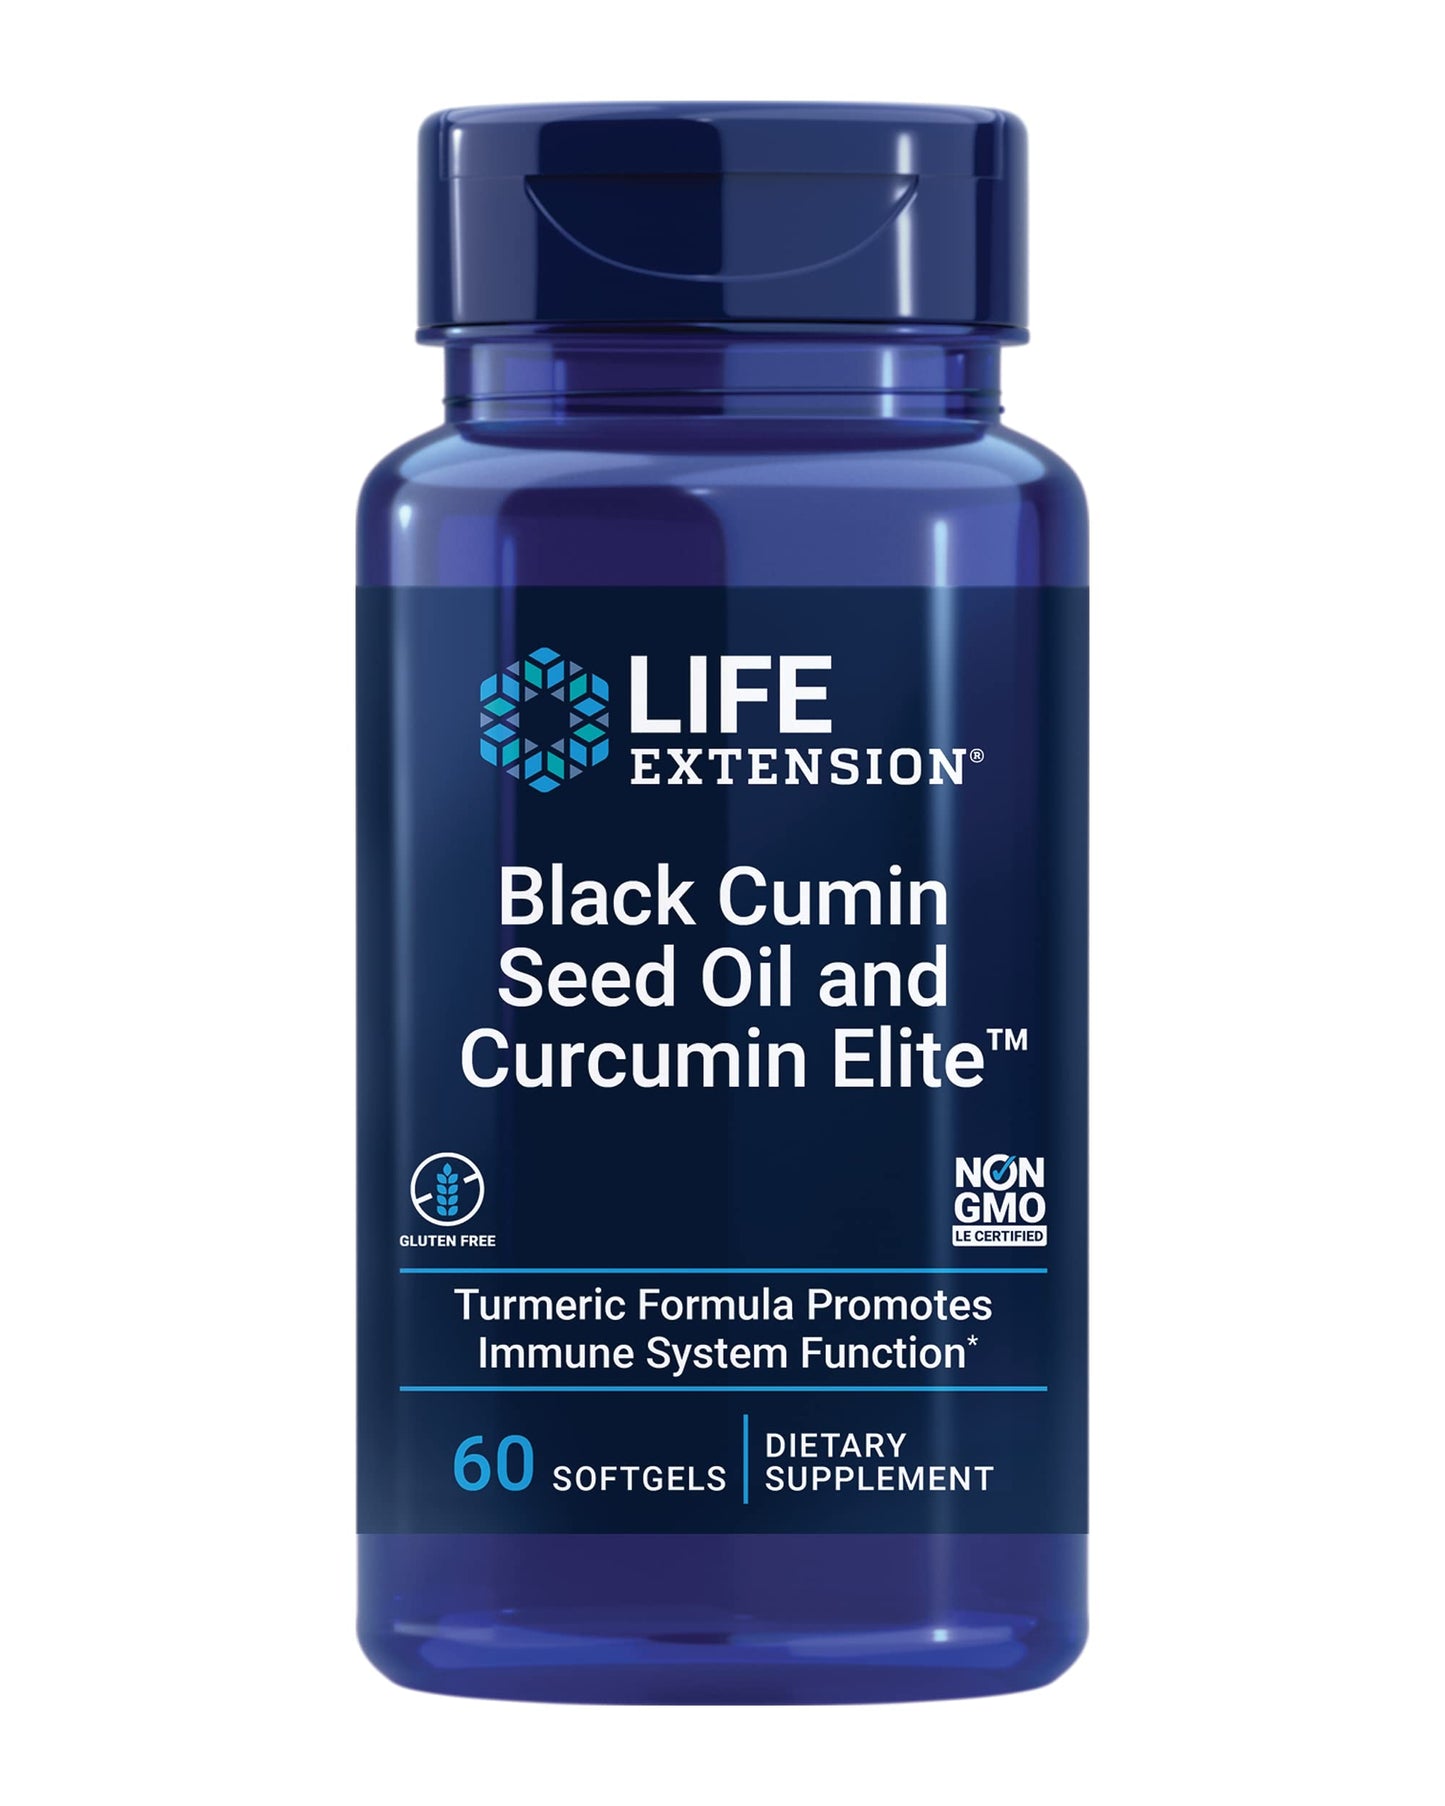 Life Extension Black Cumin Seed Oil and Curcumin Elite 60softgels